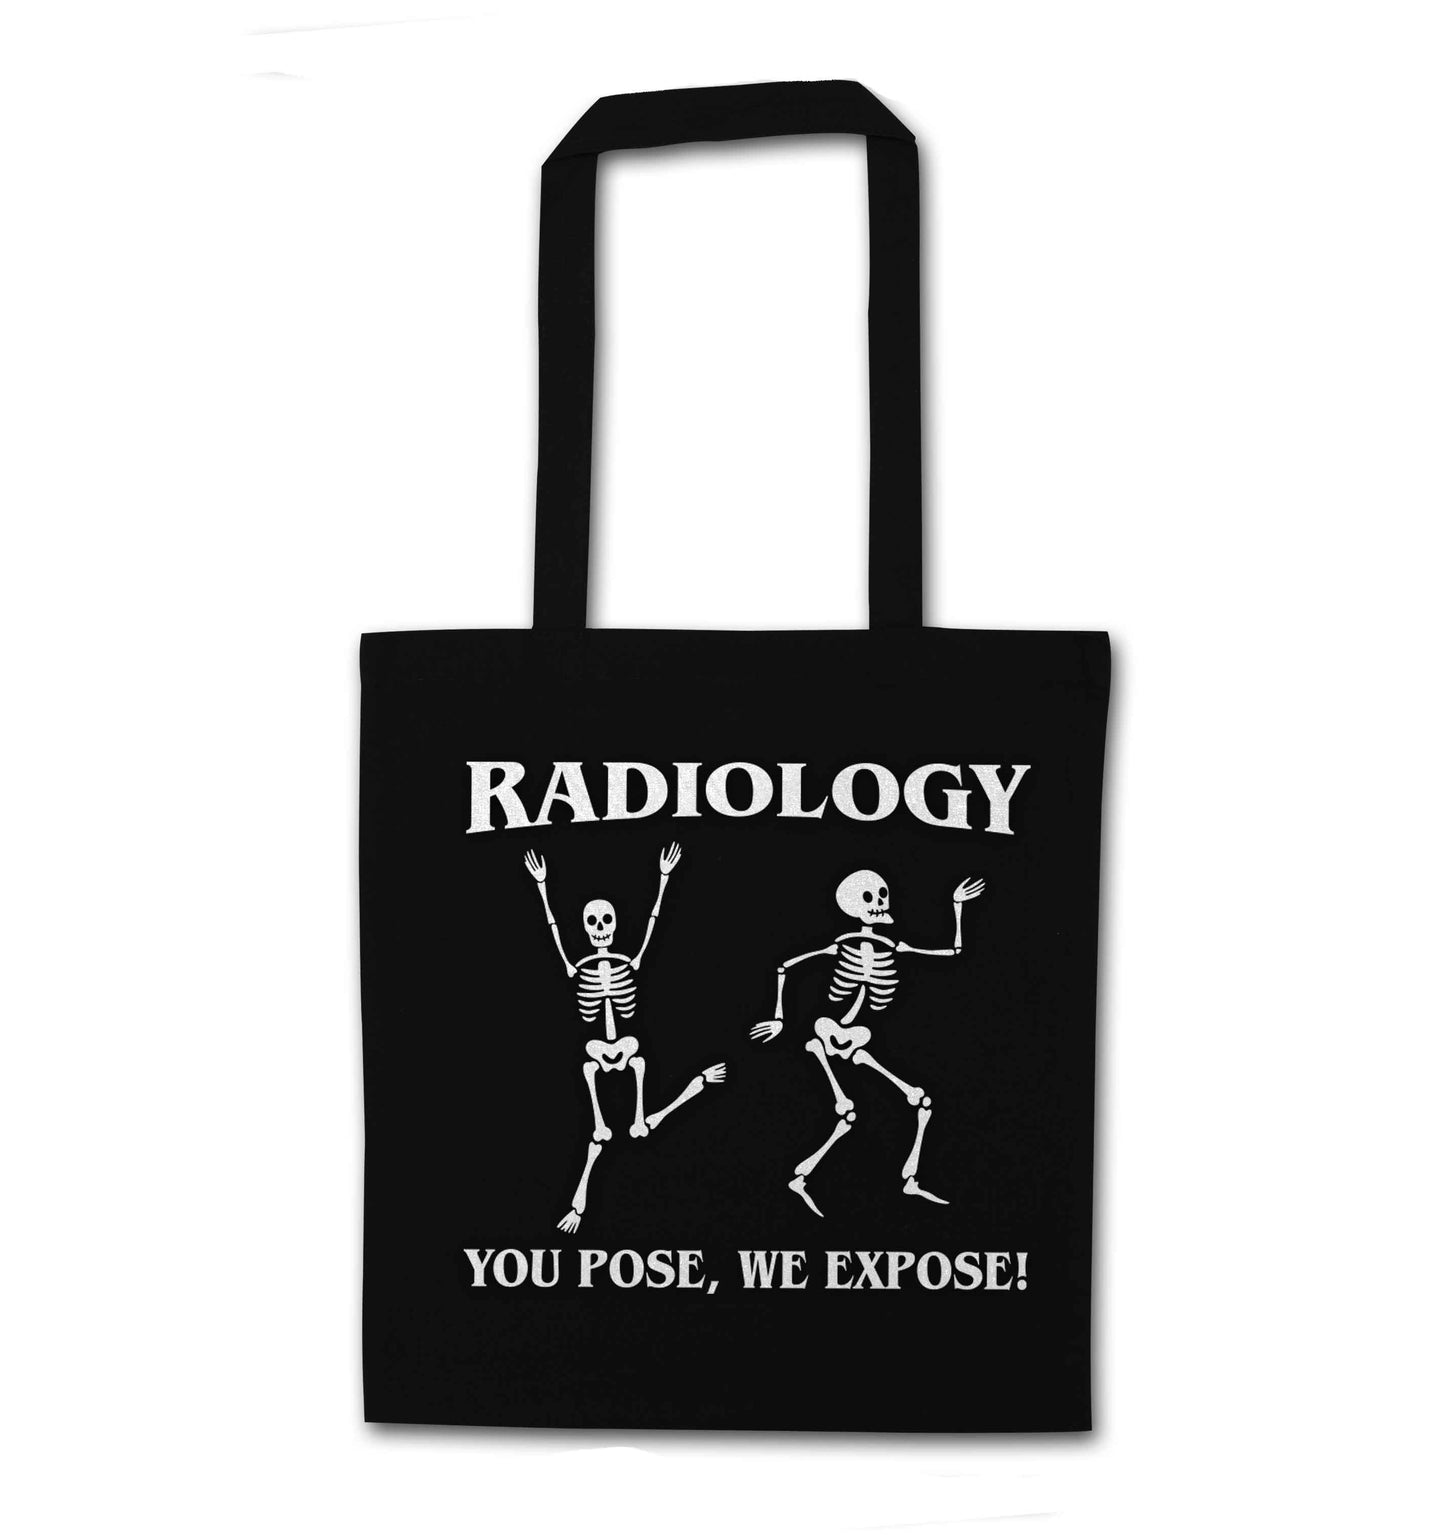 Radiology you pose we expose black tote bag